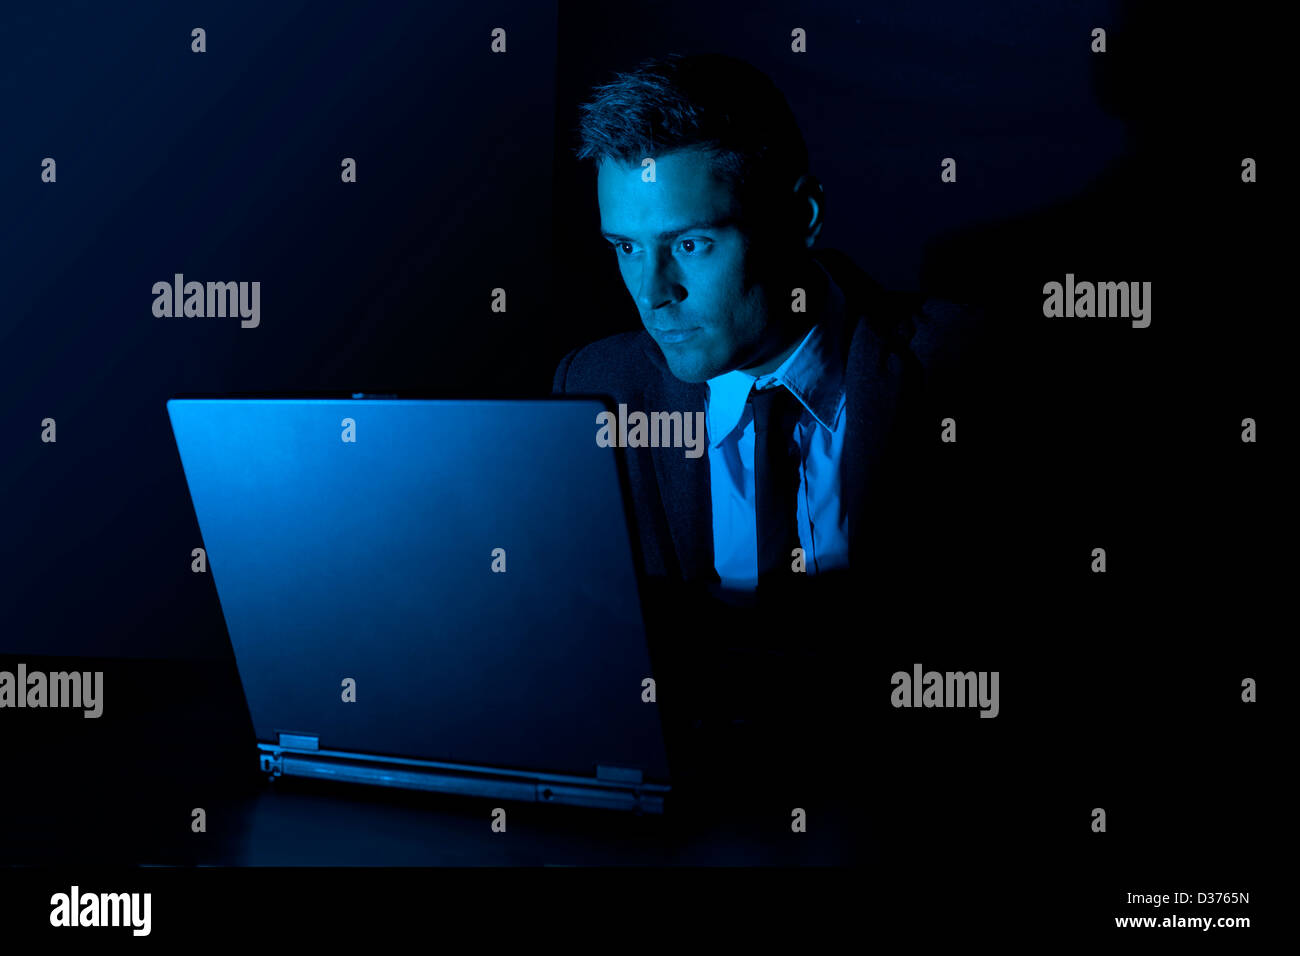 Uomo al lavoro su un computer portatile al buio Foto Stock